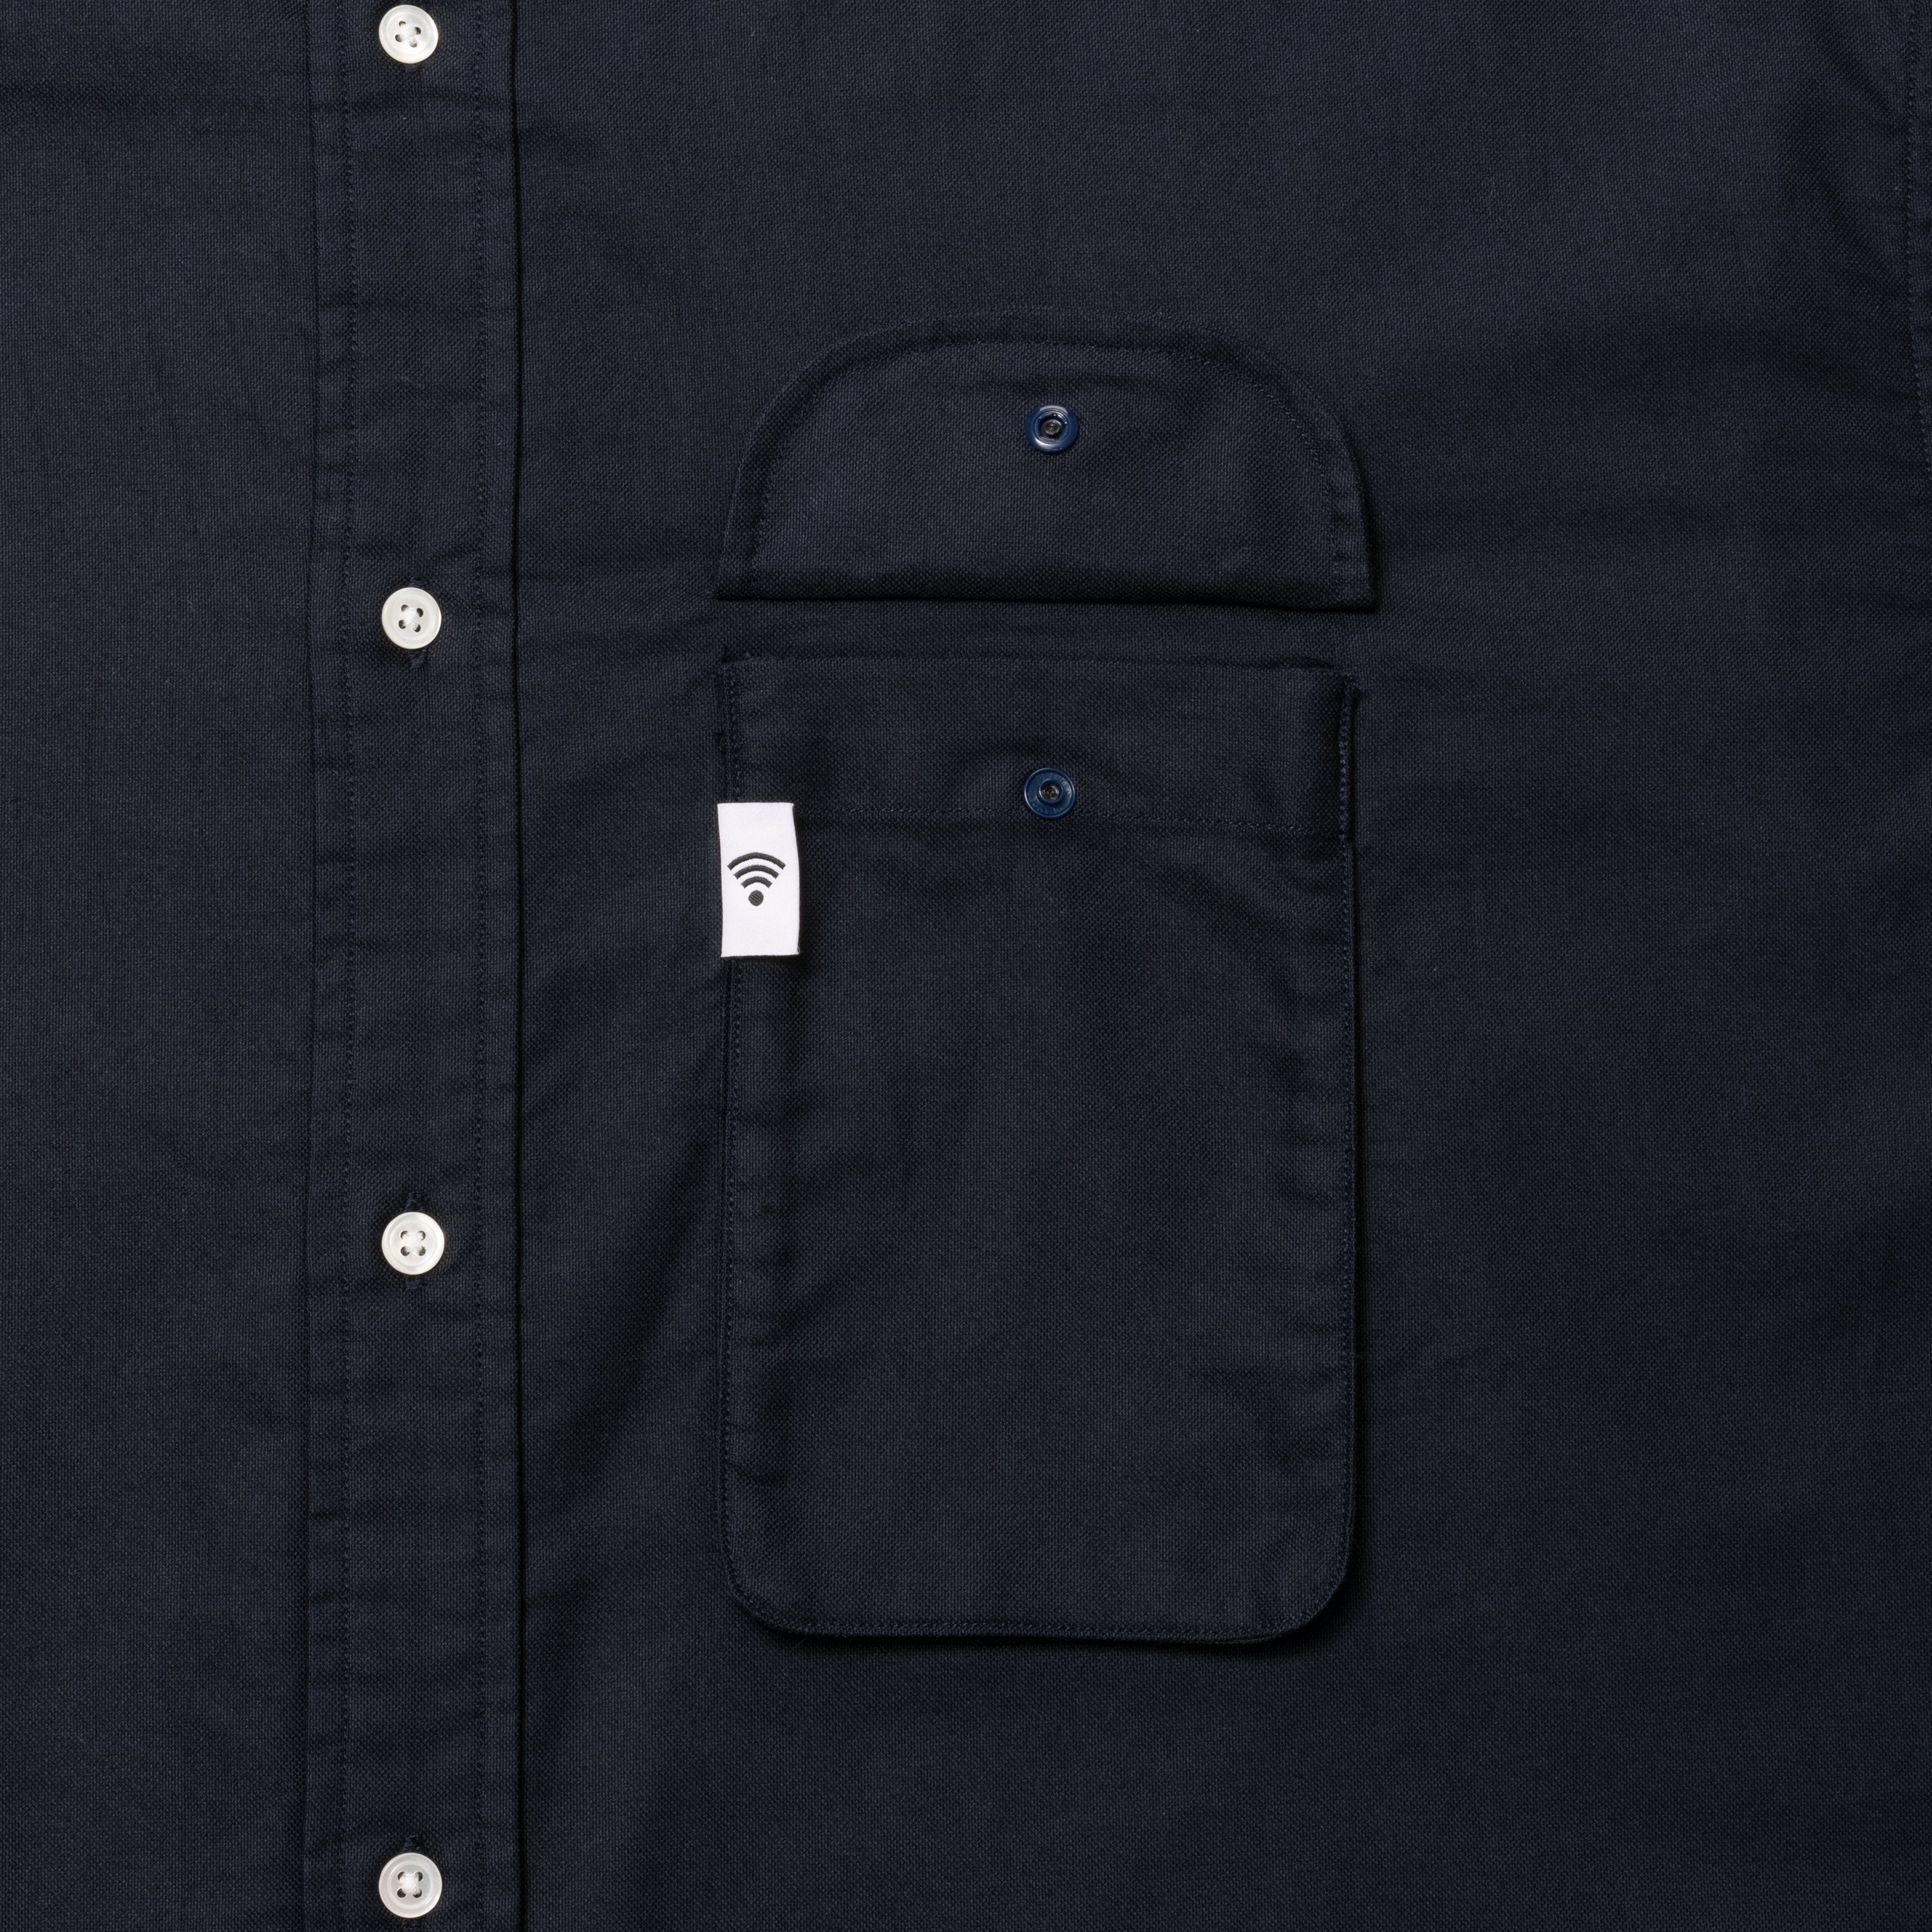 Cellphone Pocket Oxford Button Down Shirts[NAVY]